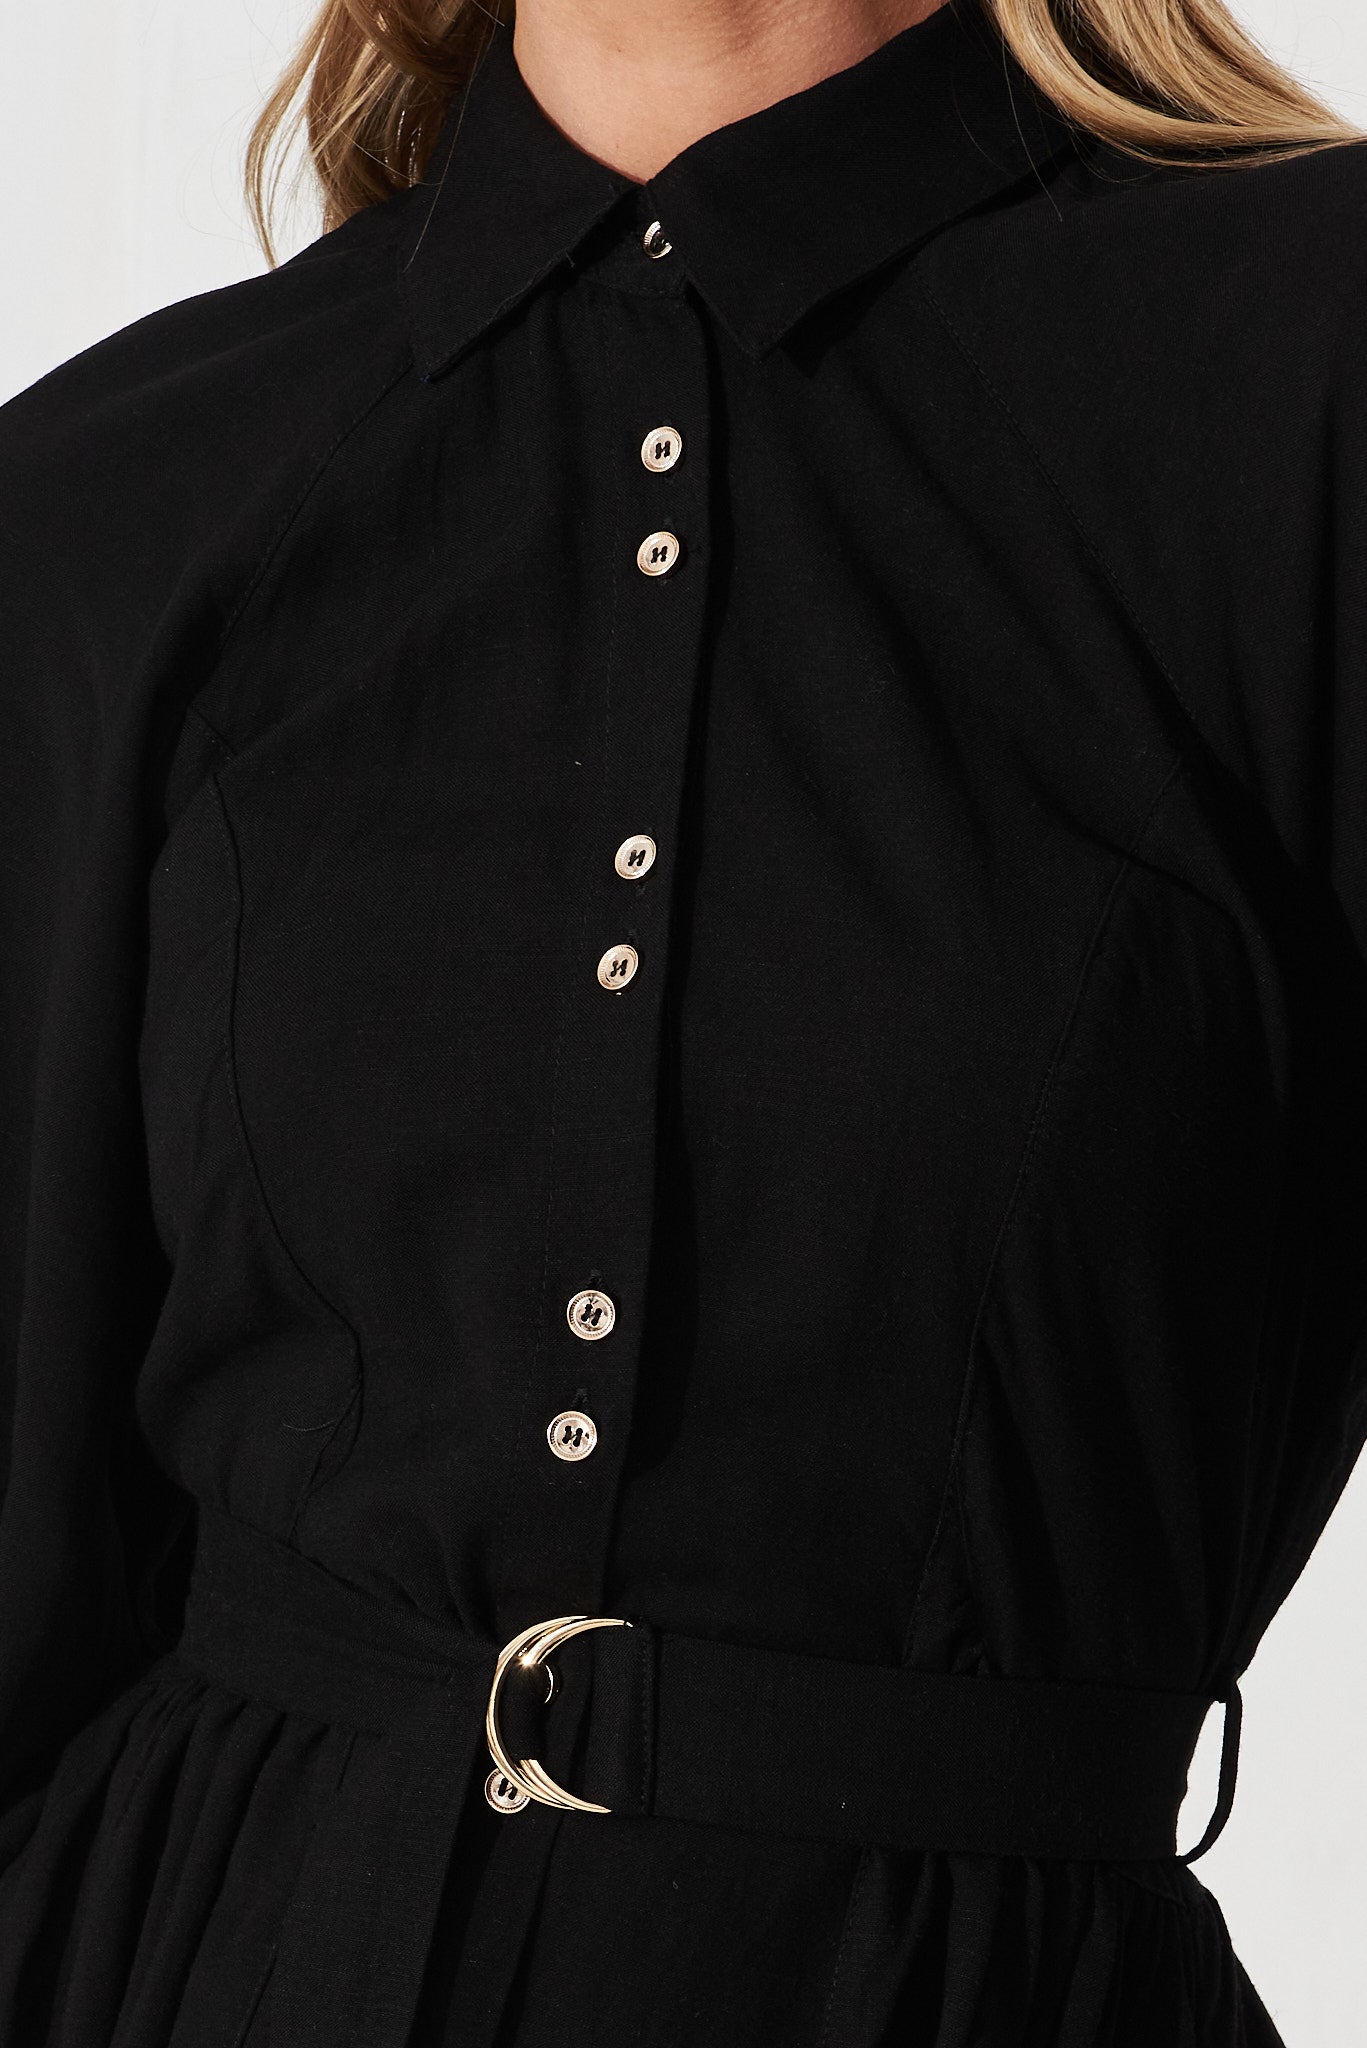 NA-KD JERSEY SLIP MAXI DRESS - Maxi dress - black - Zalando.de